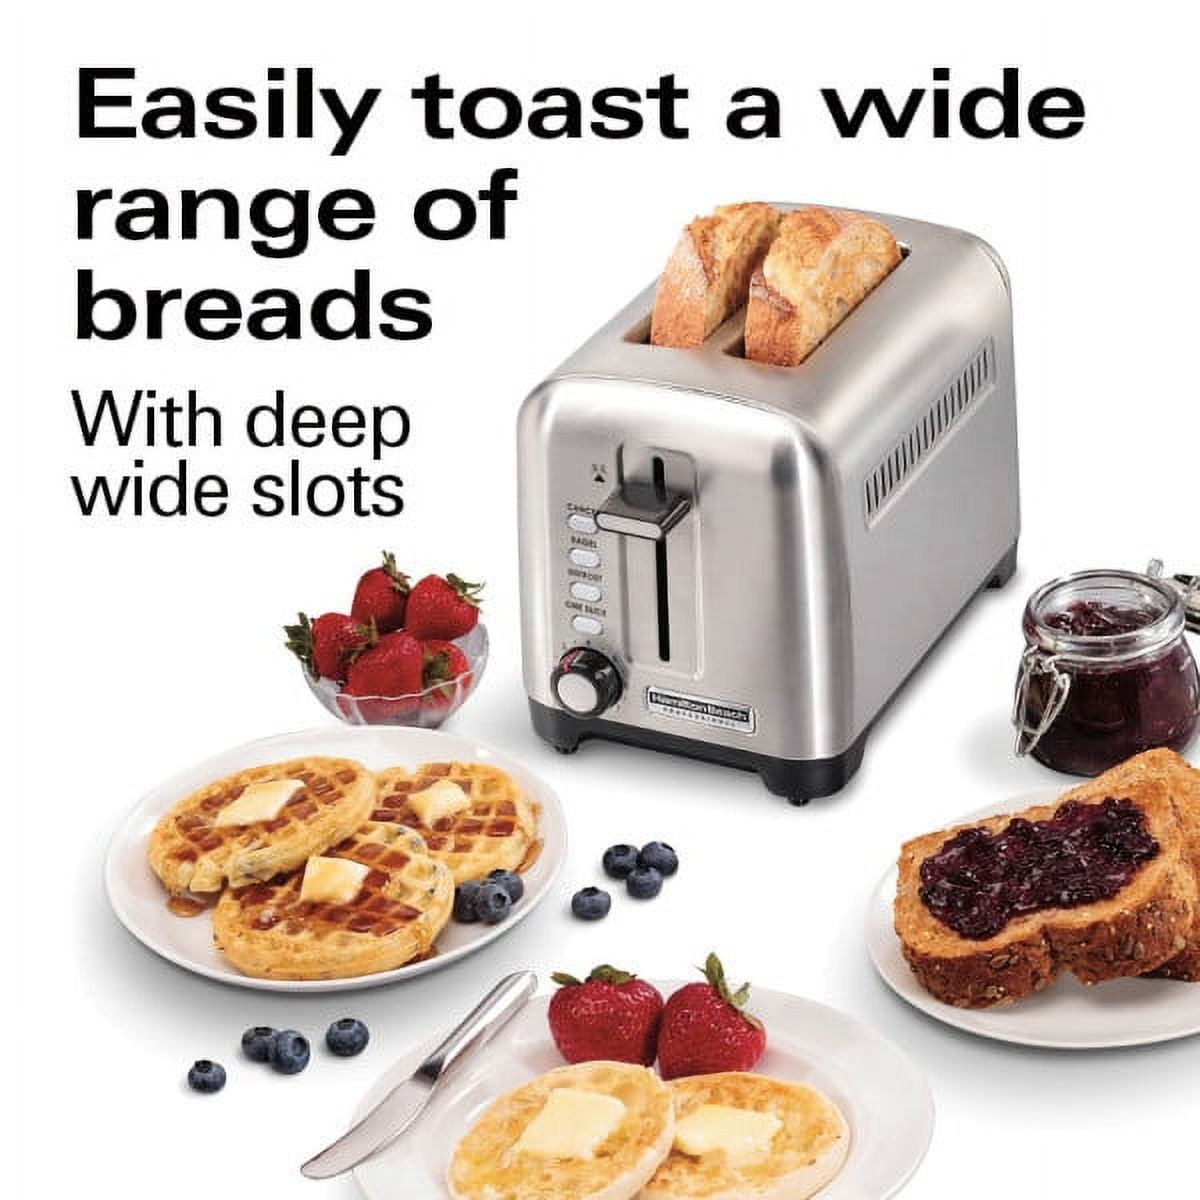 Hamilton Beach Hamilton Beach® Professional 2 Slice Toaster with